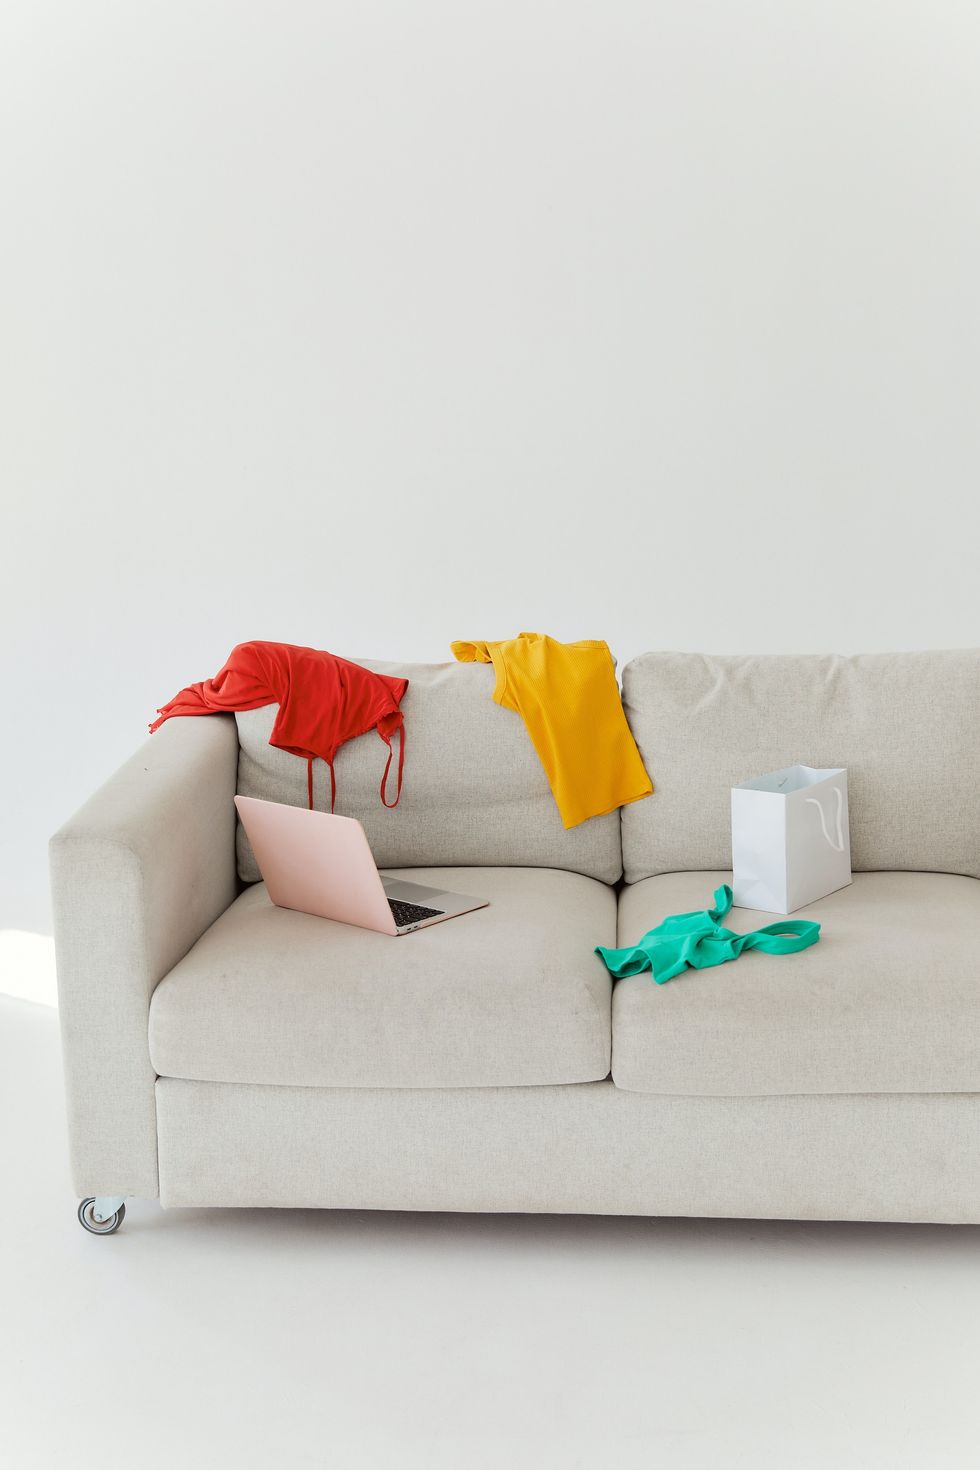 colorful clothes strewn on gray sofa